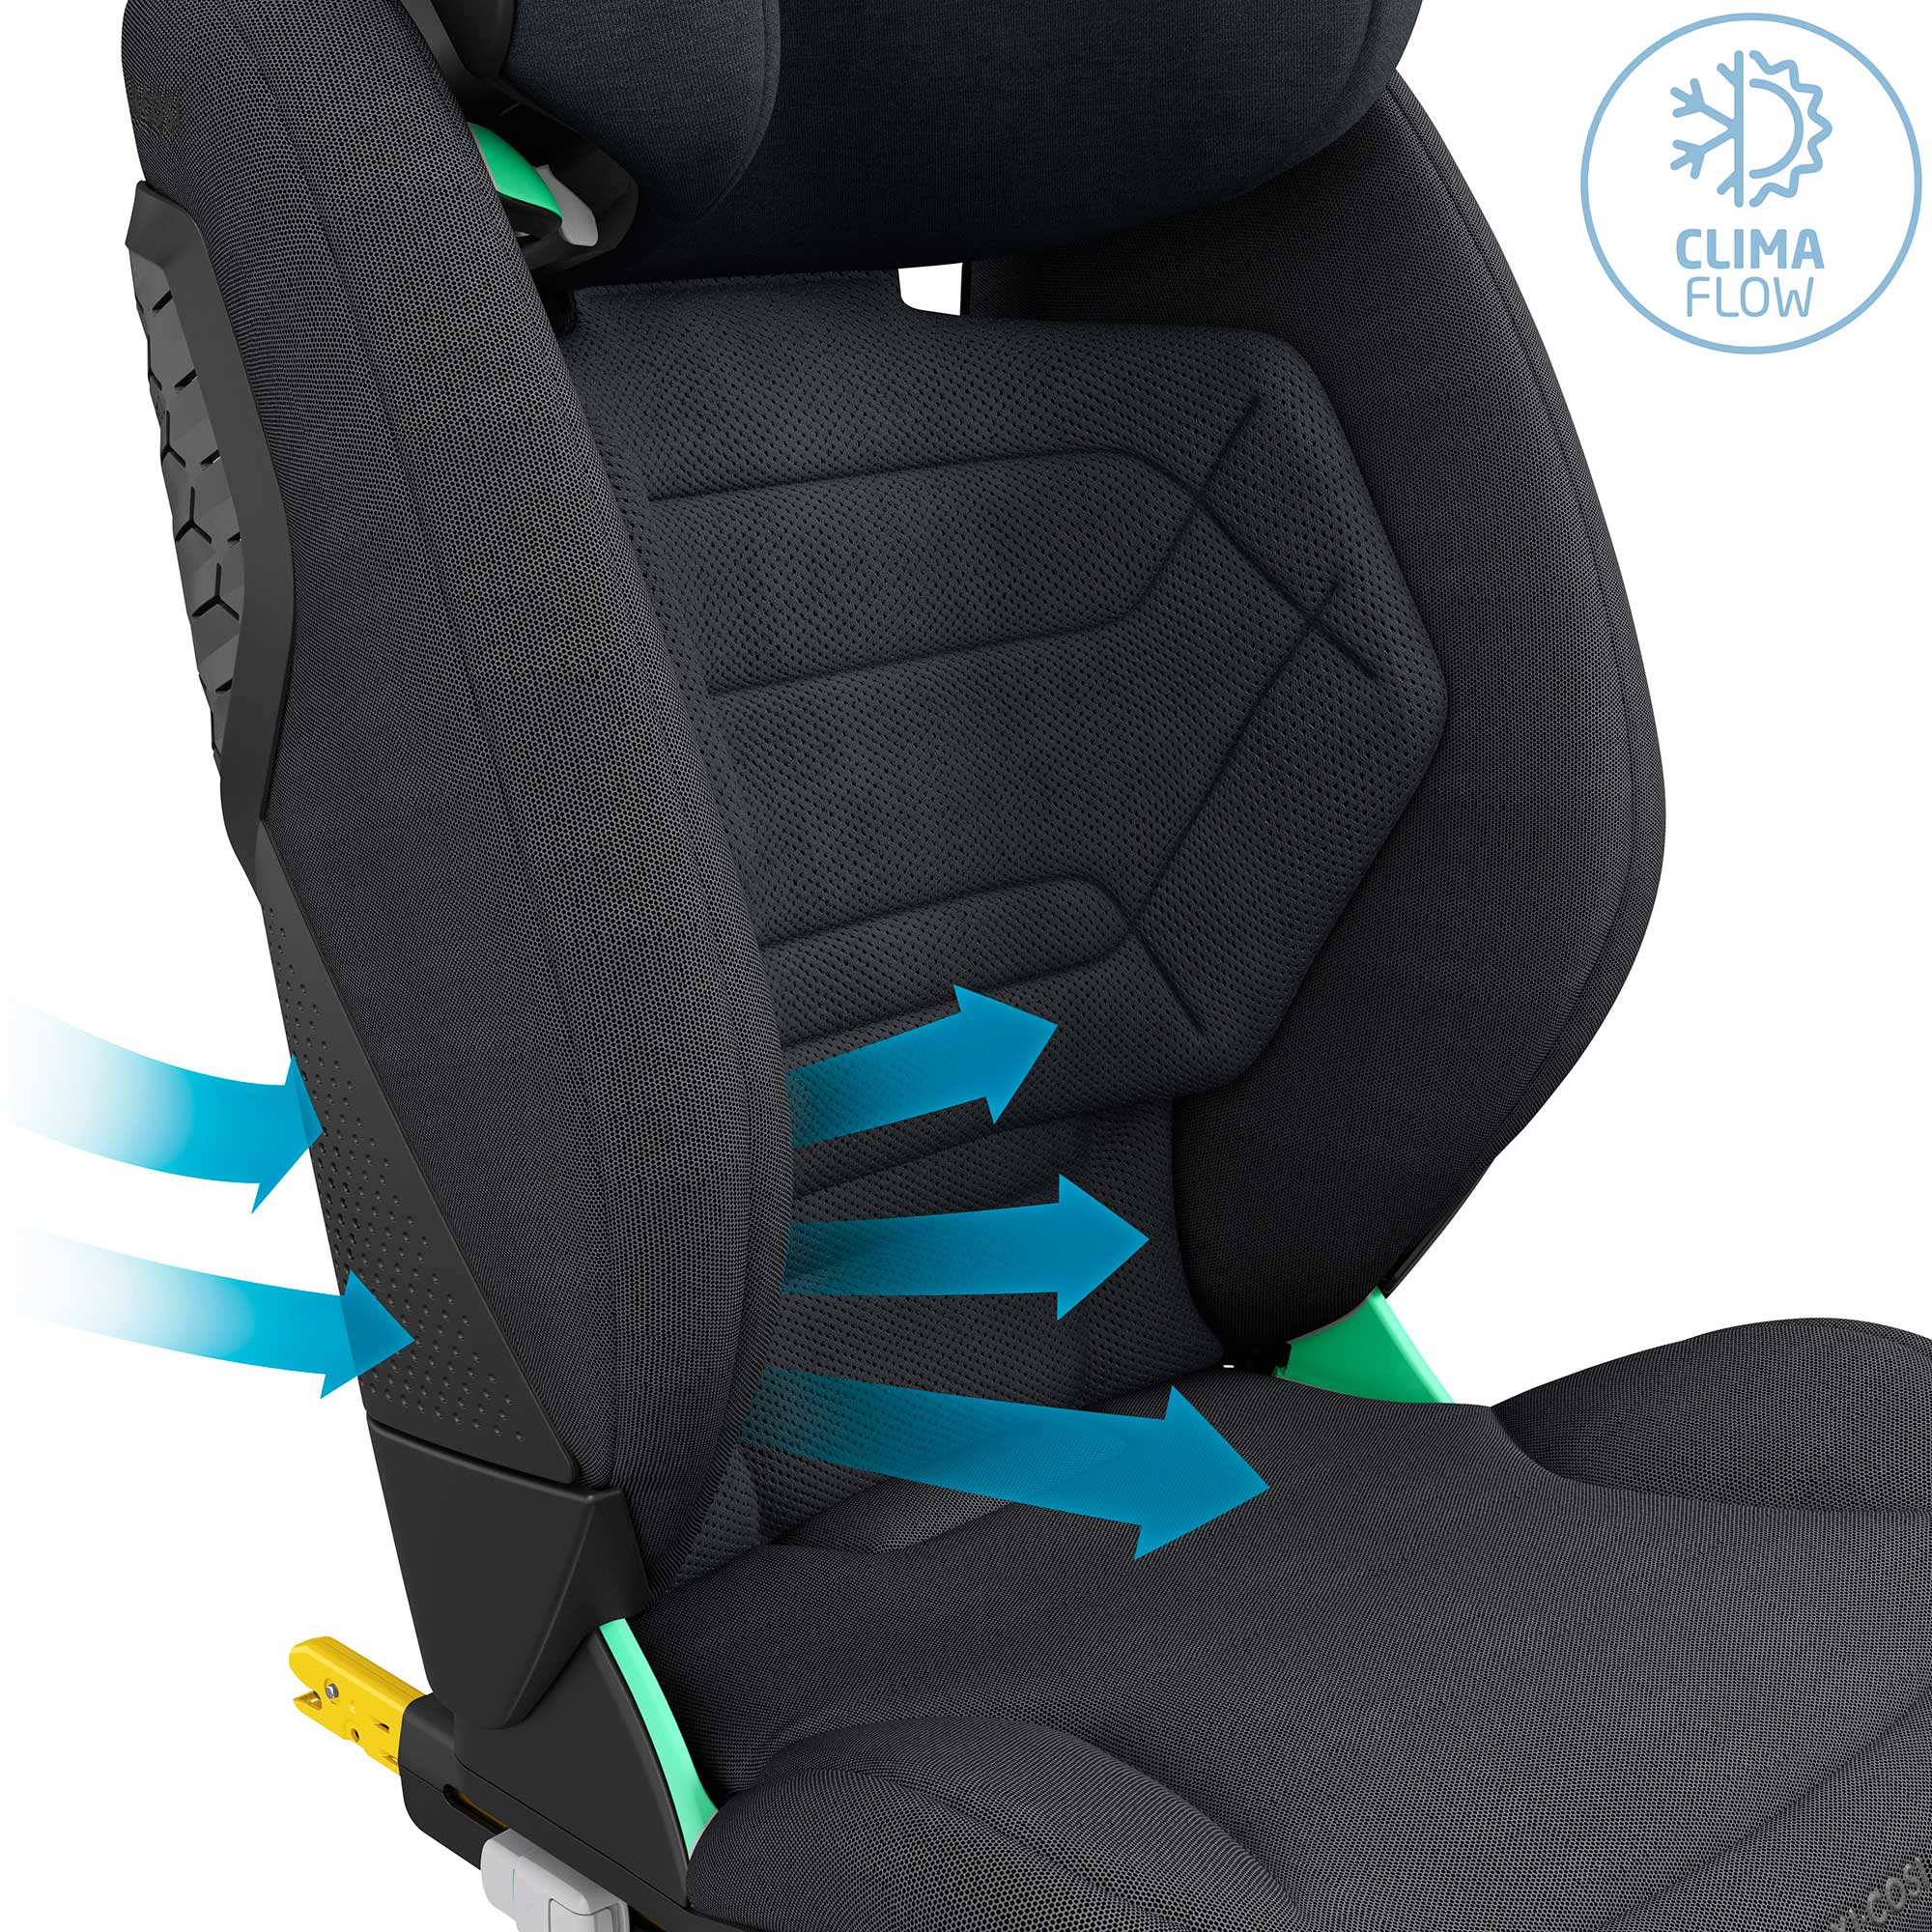 Maxi-Cosi Rodifix Pro 2 i-size Booster Seat in Authentic Graphite Highback Booster Seats 8800550111 8712930183518